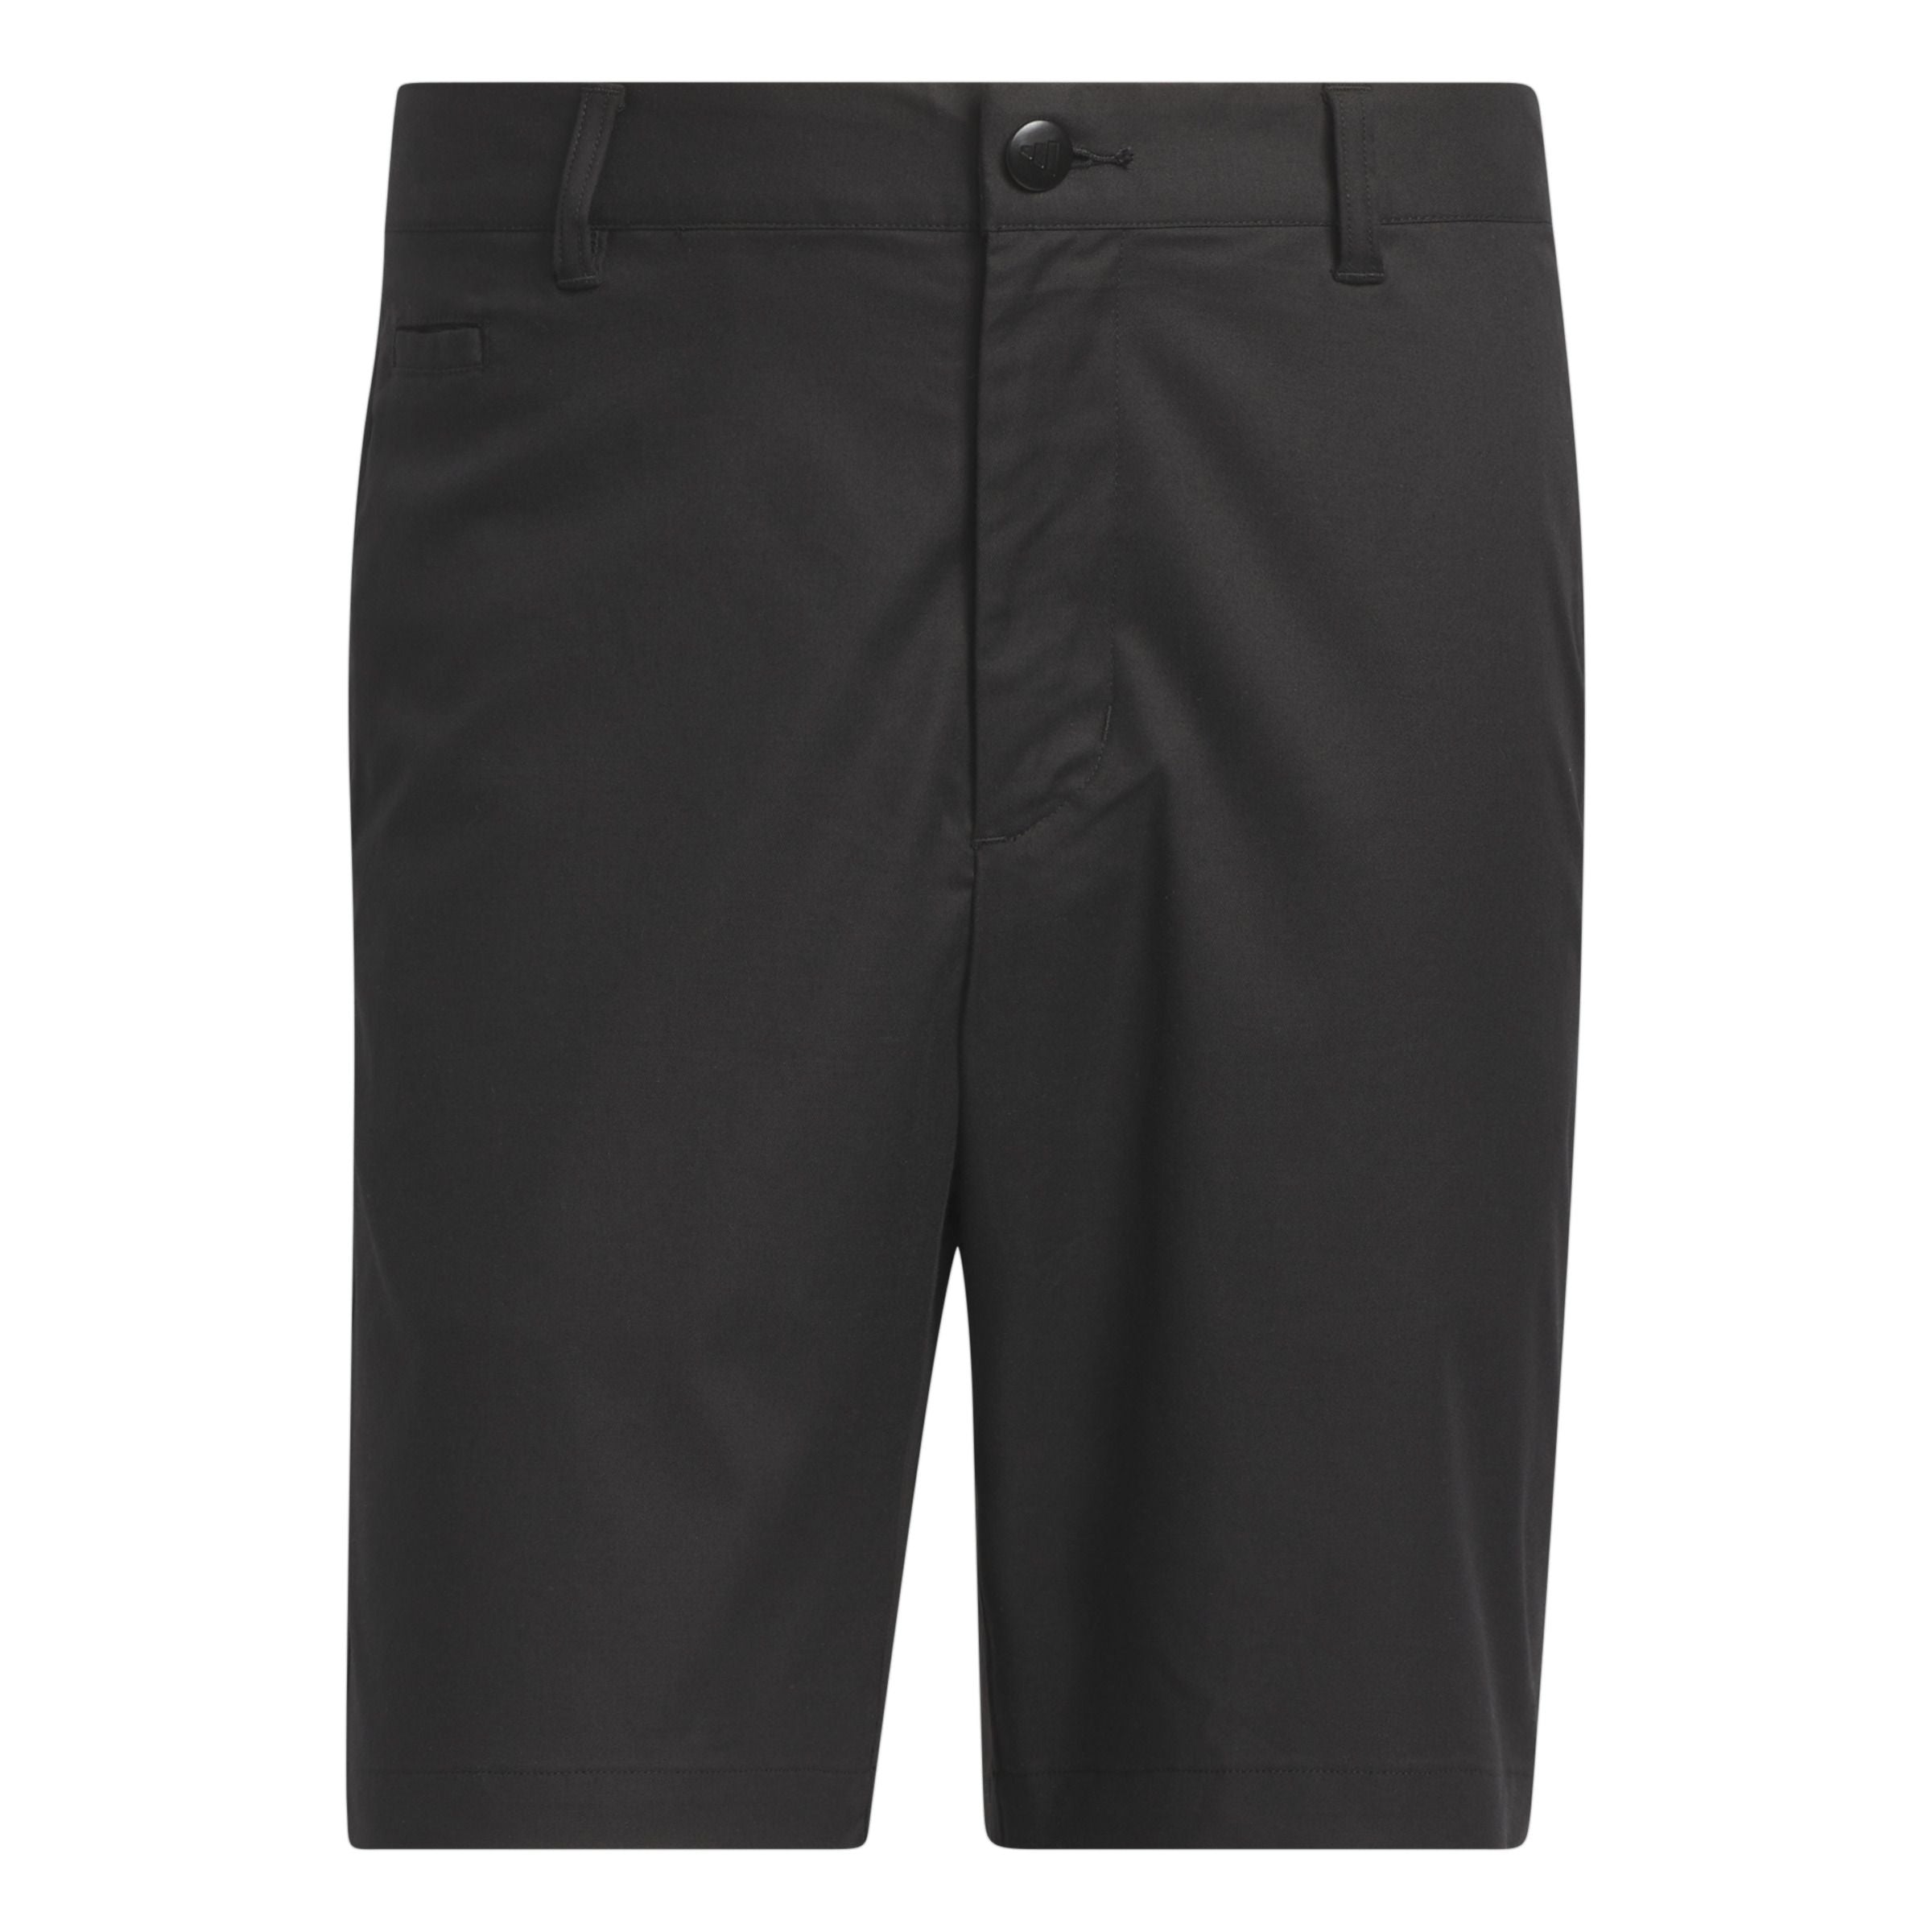 Adidas Go-To 5 Pocket Golf Shorts